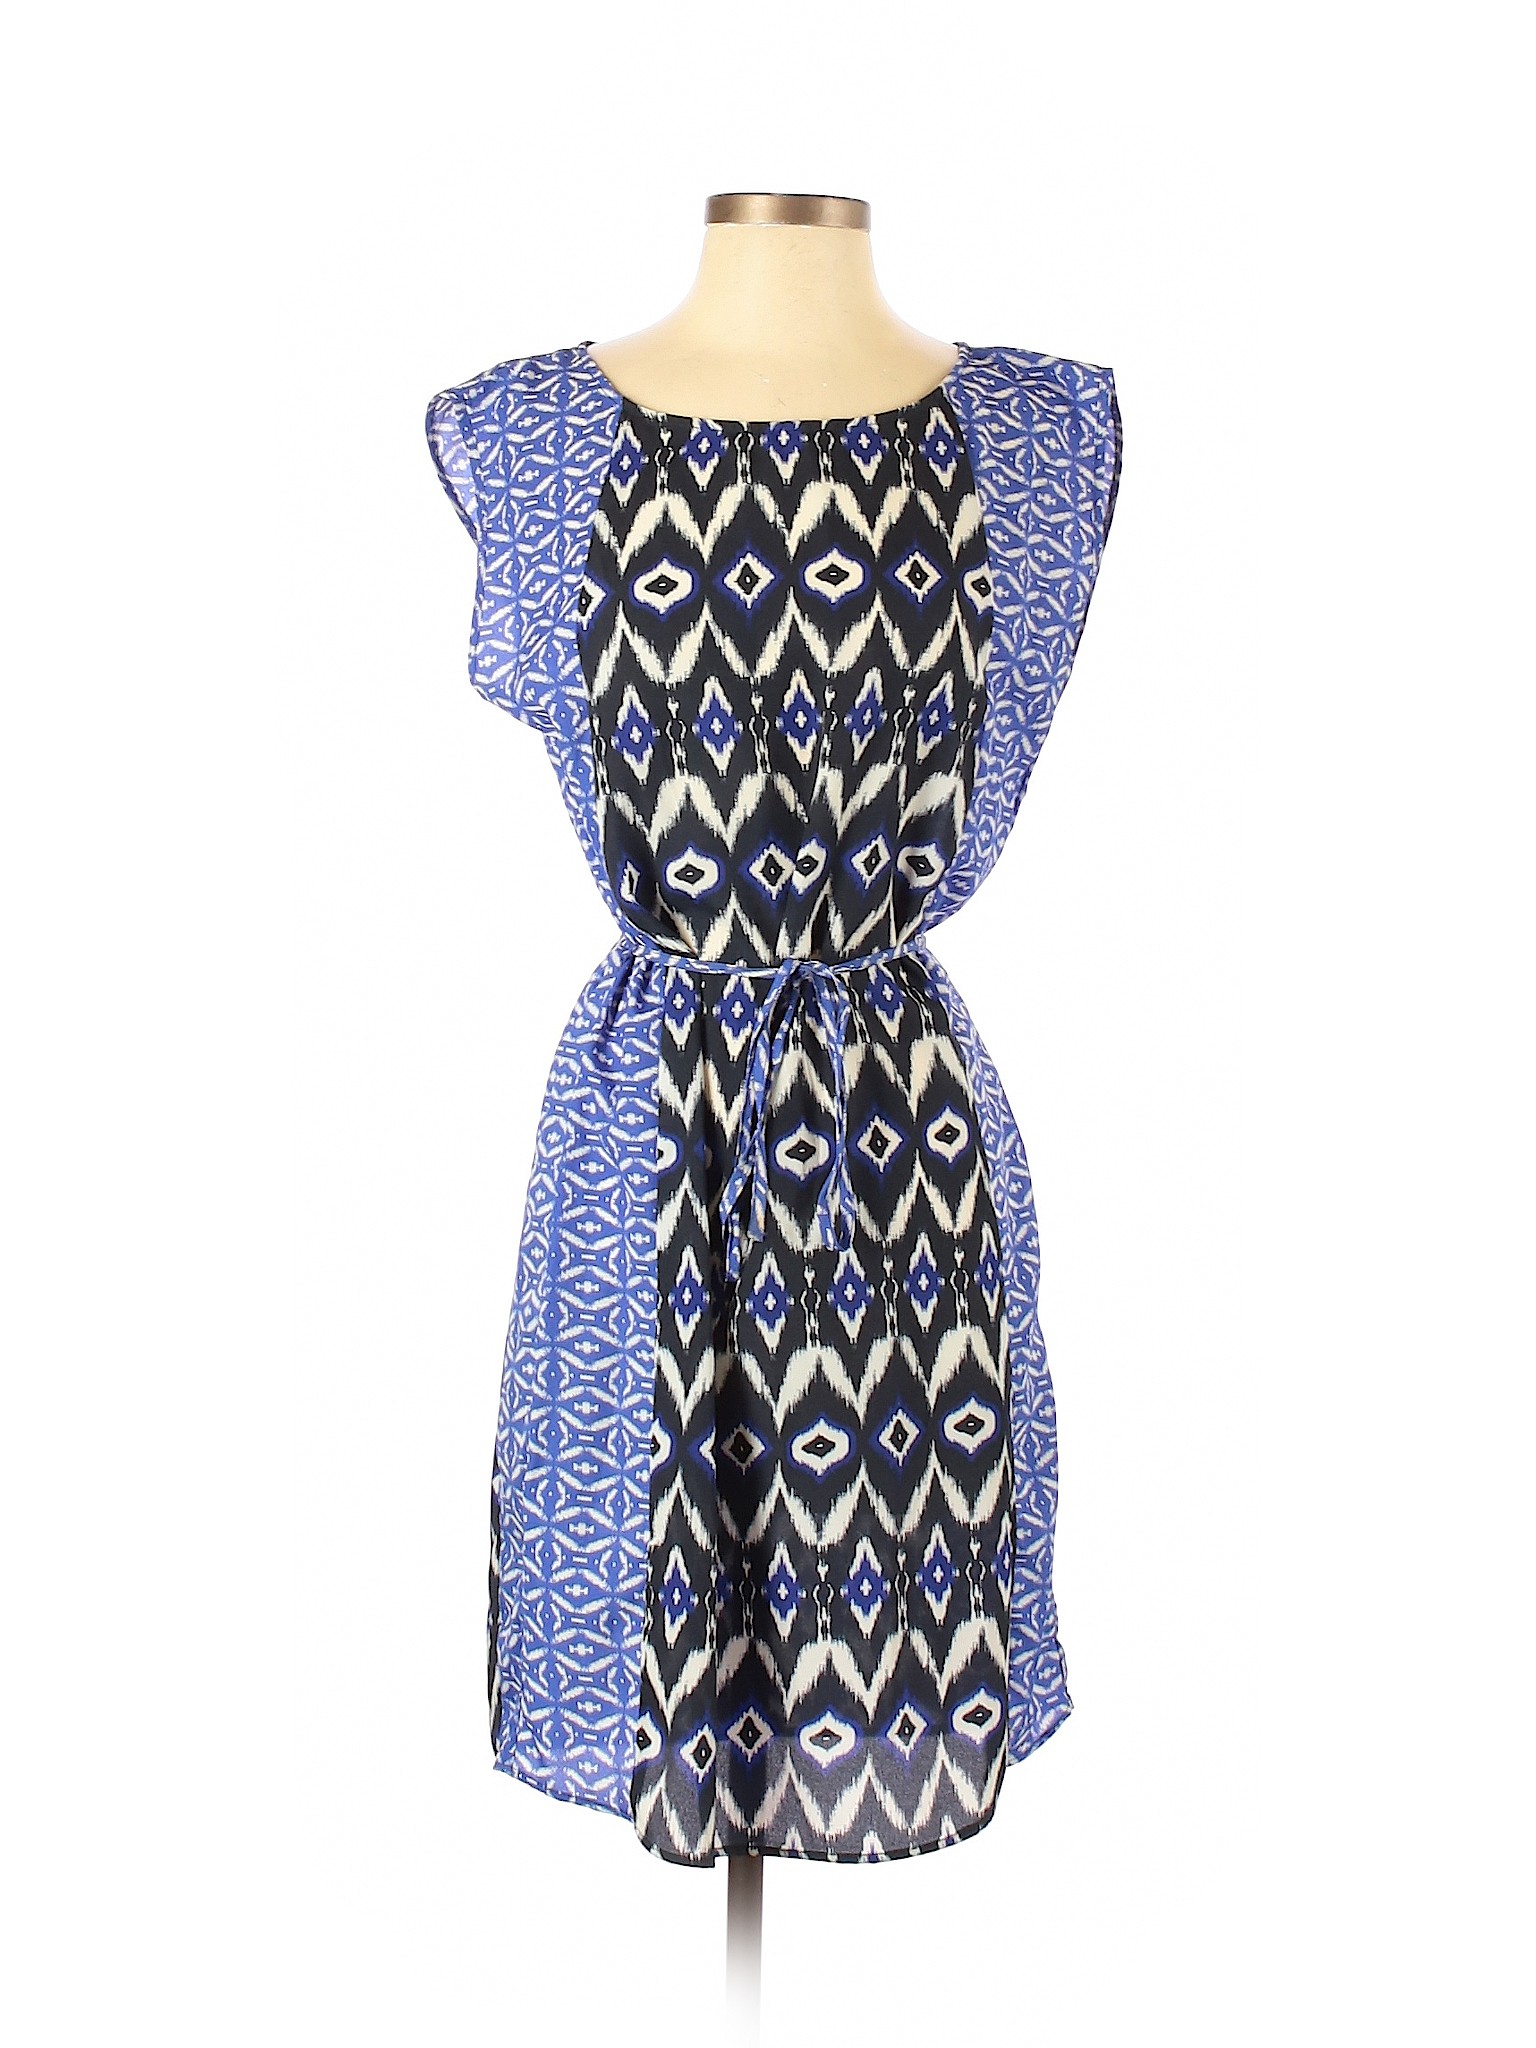 Joe Fresh Women Blue Casual Dress S | eBay